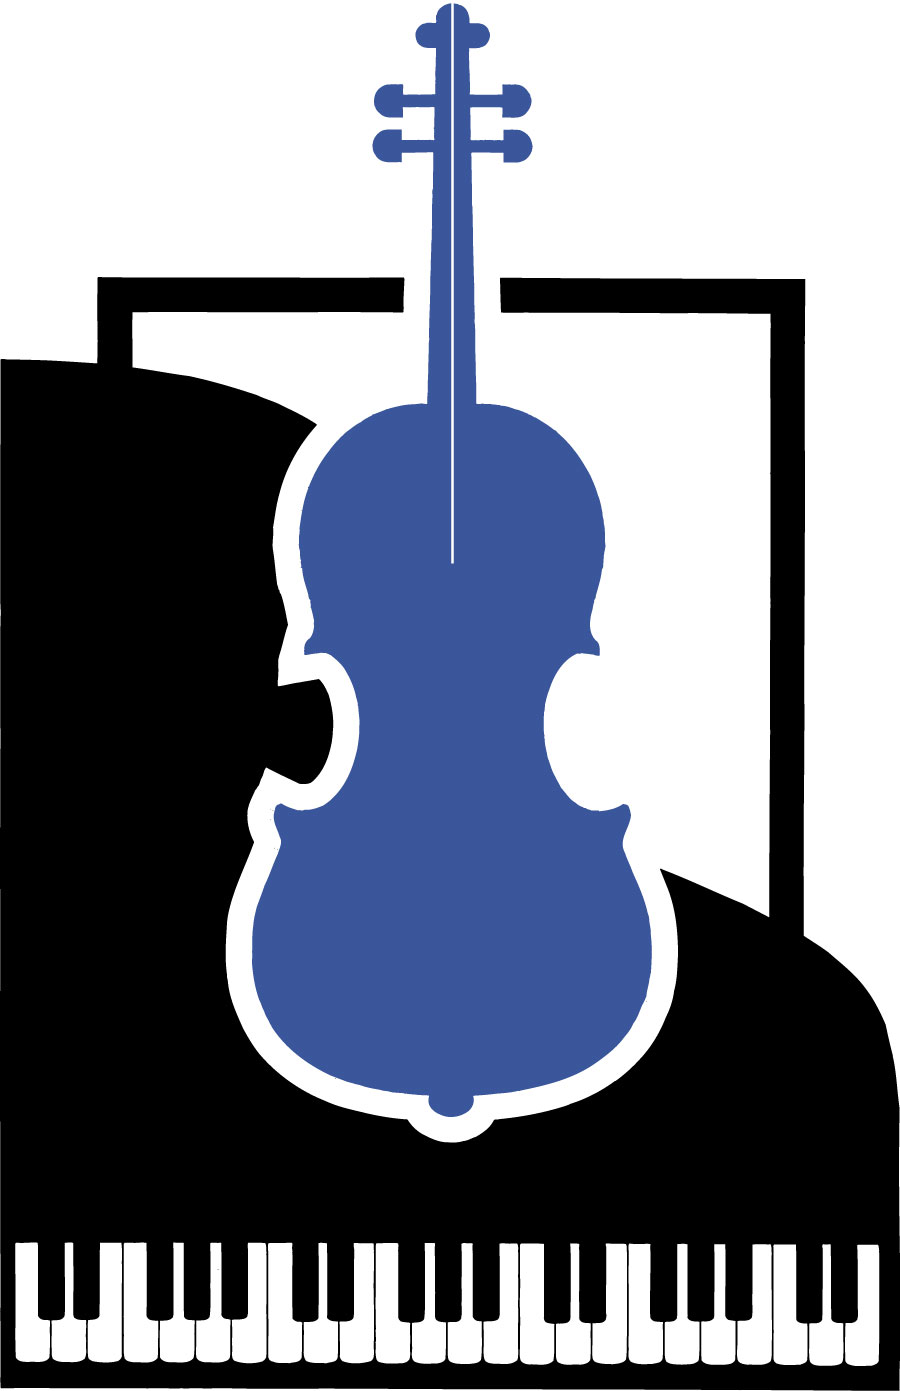 Community Music School logo